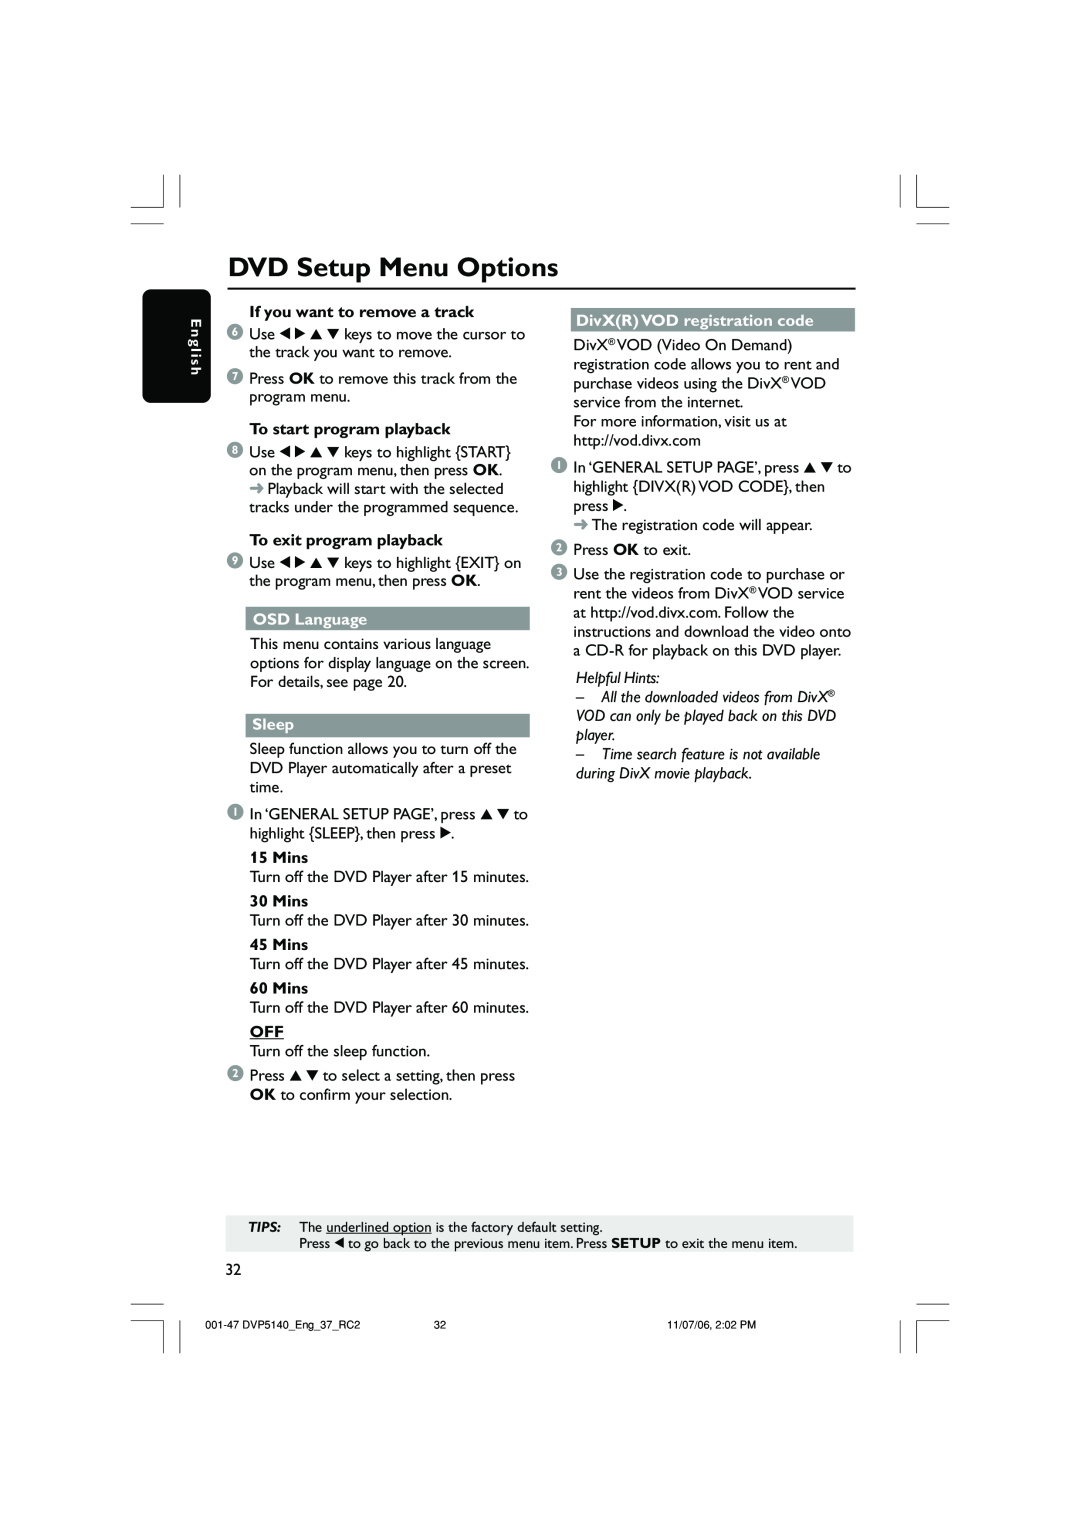 Philips DVP5140 user manual DivXR VOD registration code 